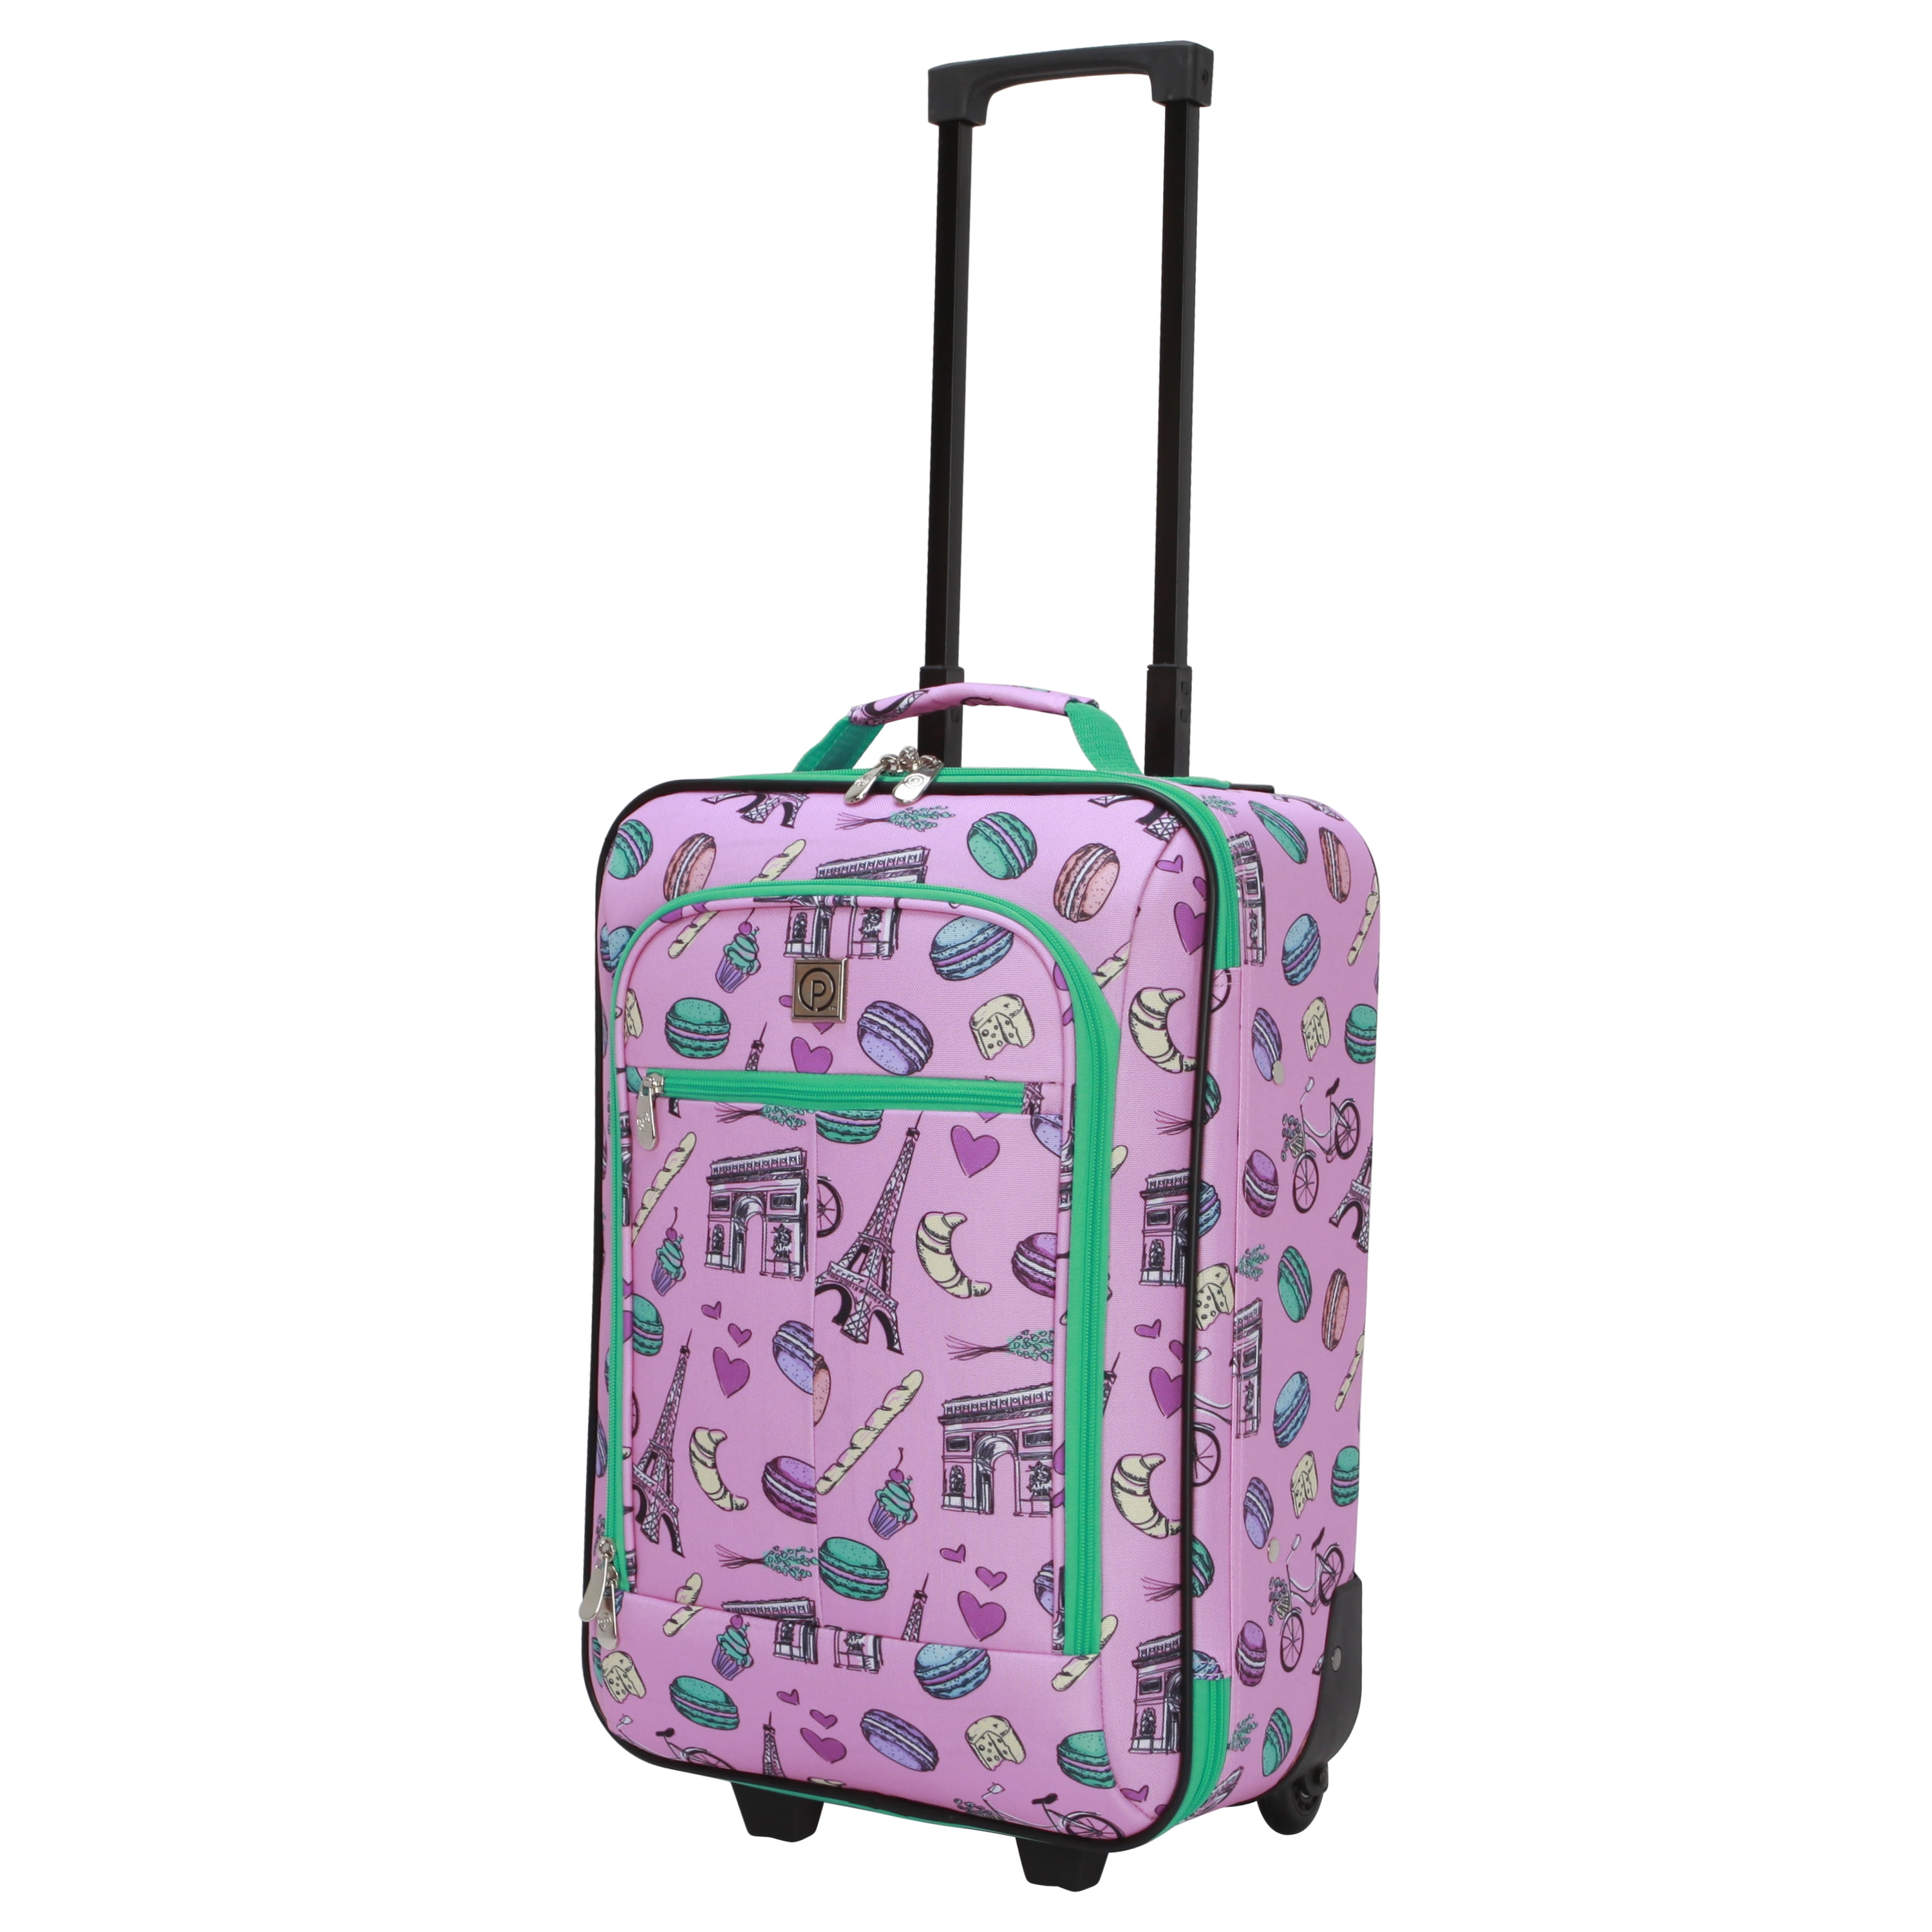 Protege 3 Piece 18 Softside Kids Luggage Set, Heart 